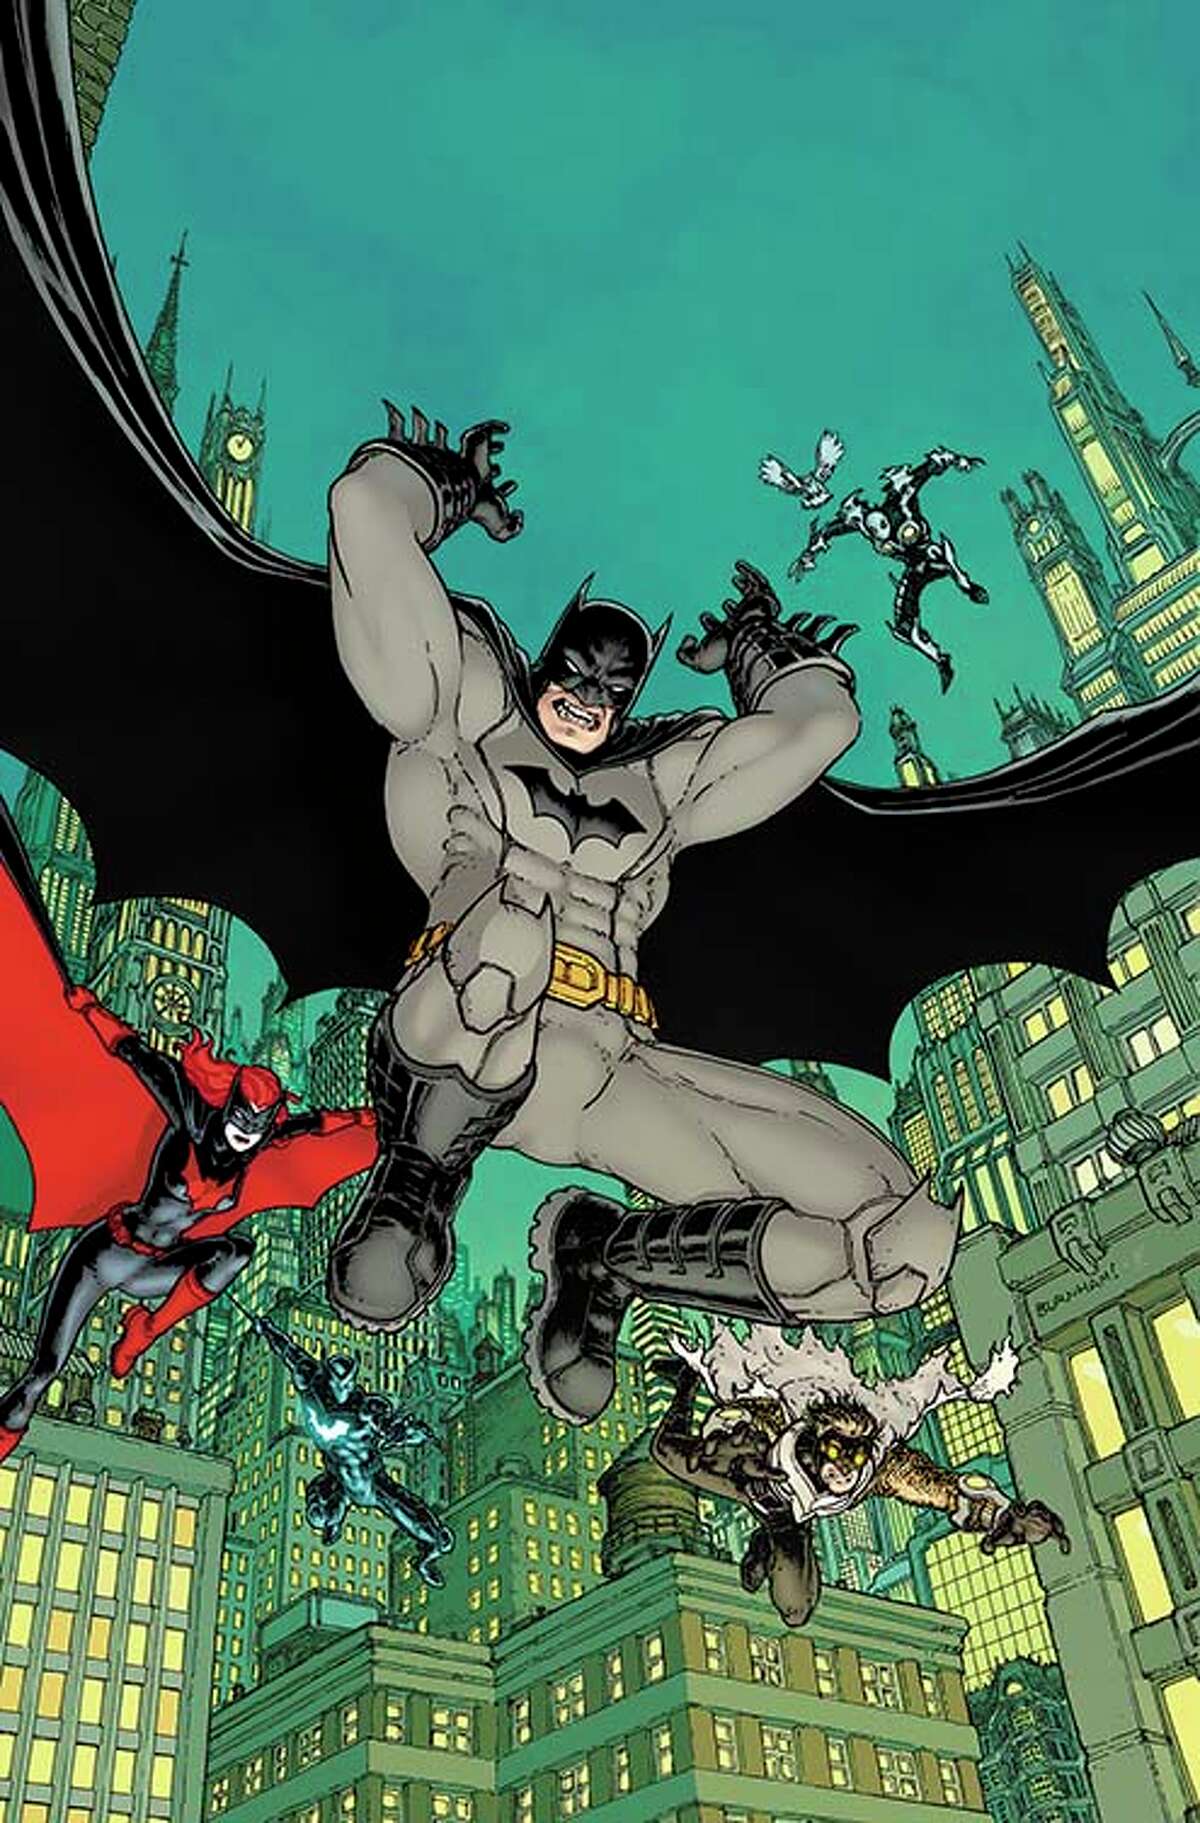 As Batman turns 75, DC plans weekly comic book